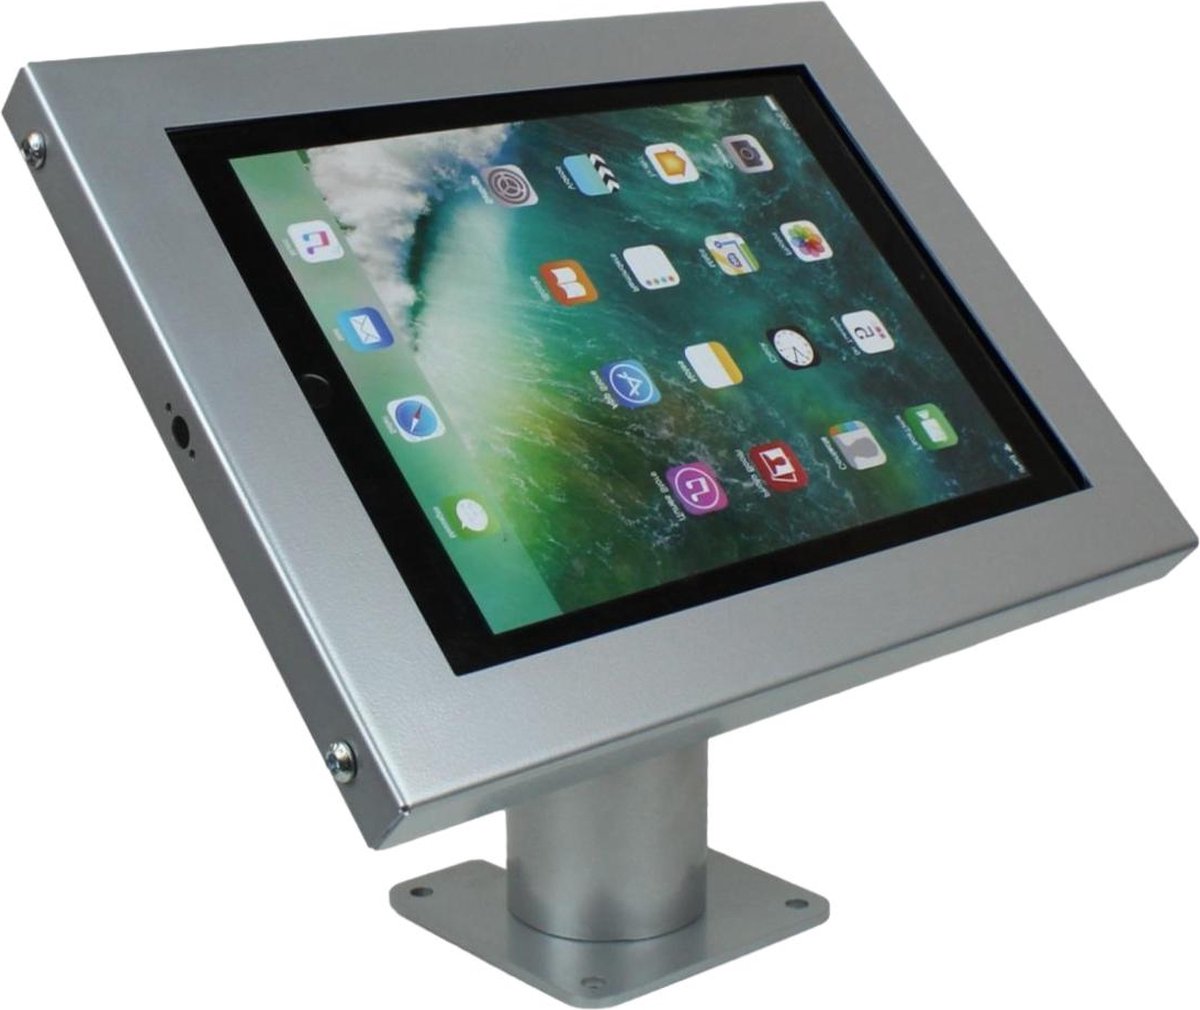 Tablethouder - tabletstandaard - standaard tablet - ipad houder - tablet tafelstandaard - houder voor tablet - voor tablets tussen 12-13 inch - grijs